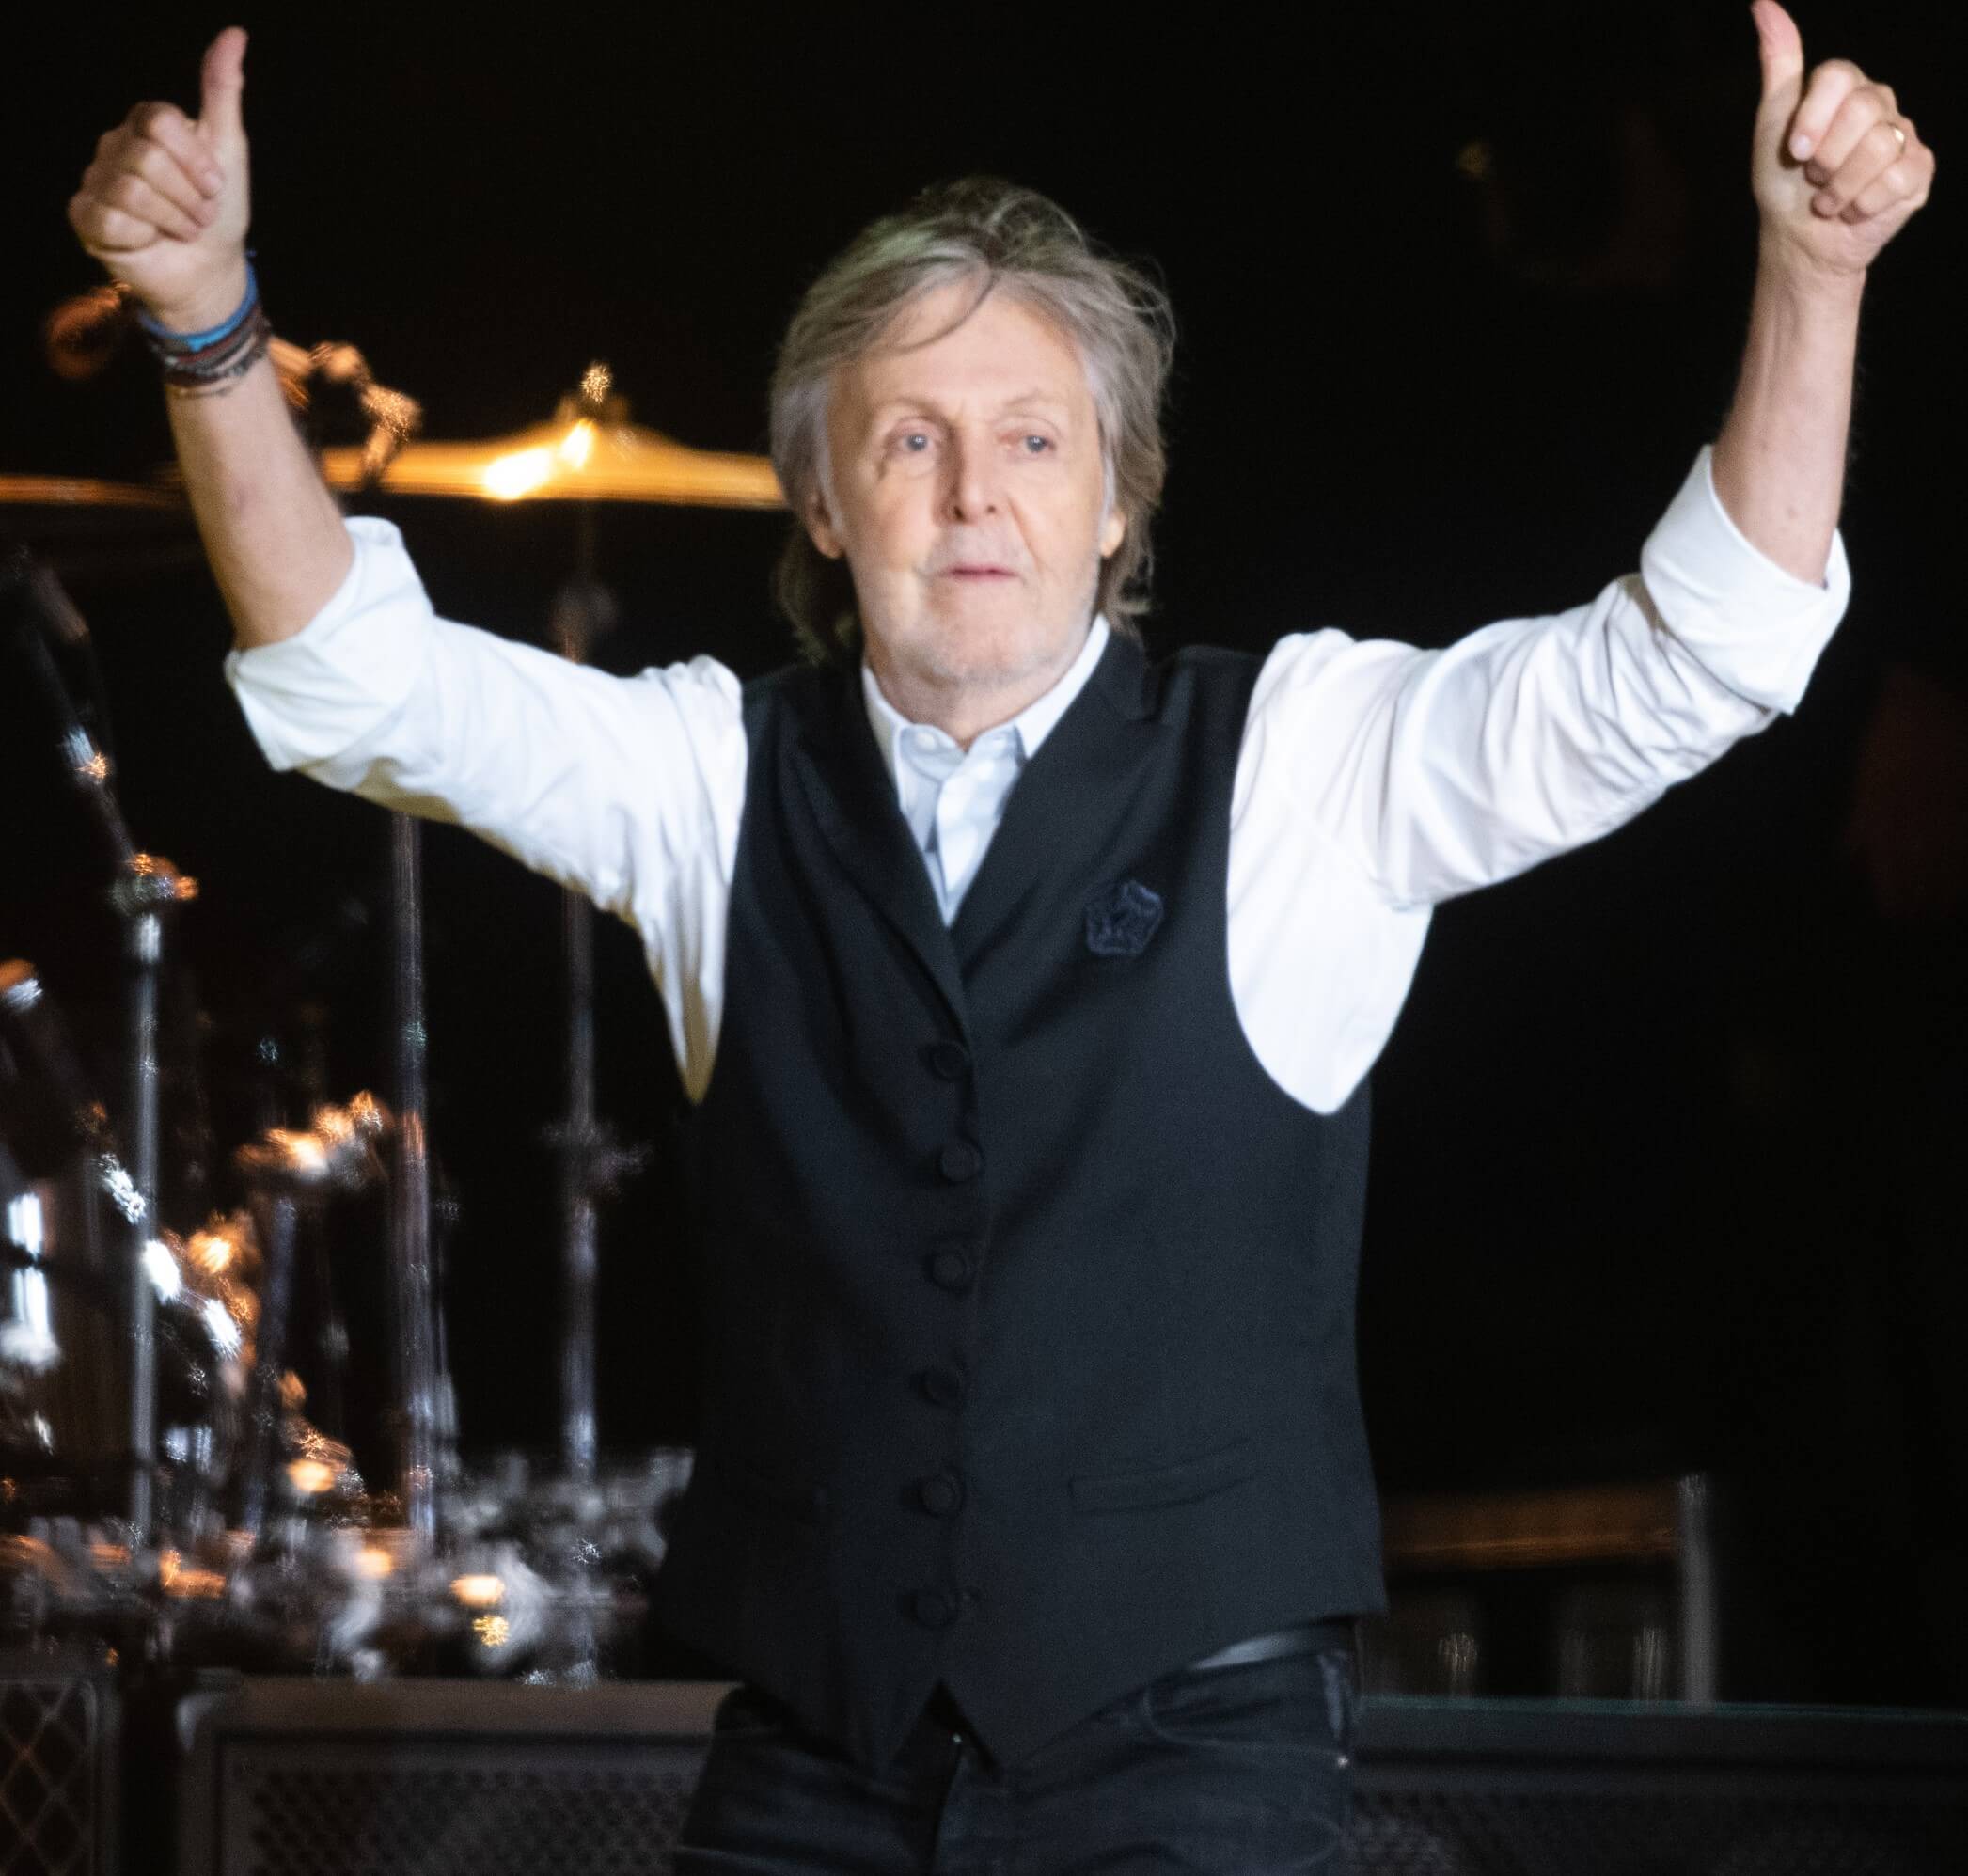 Paul McCartney raising his arms